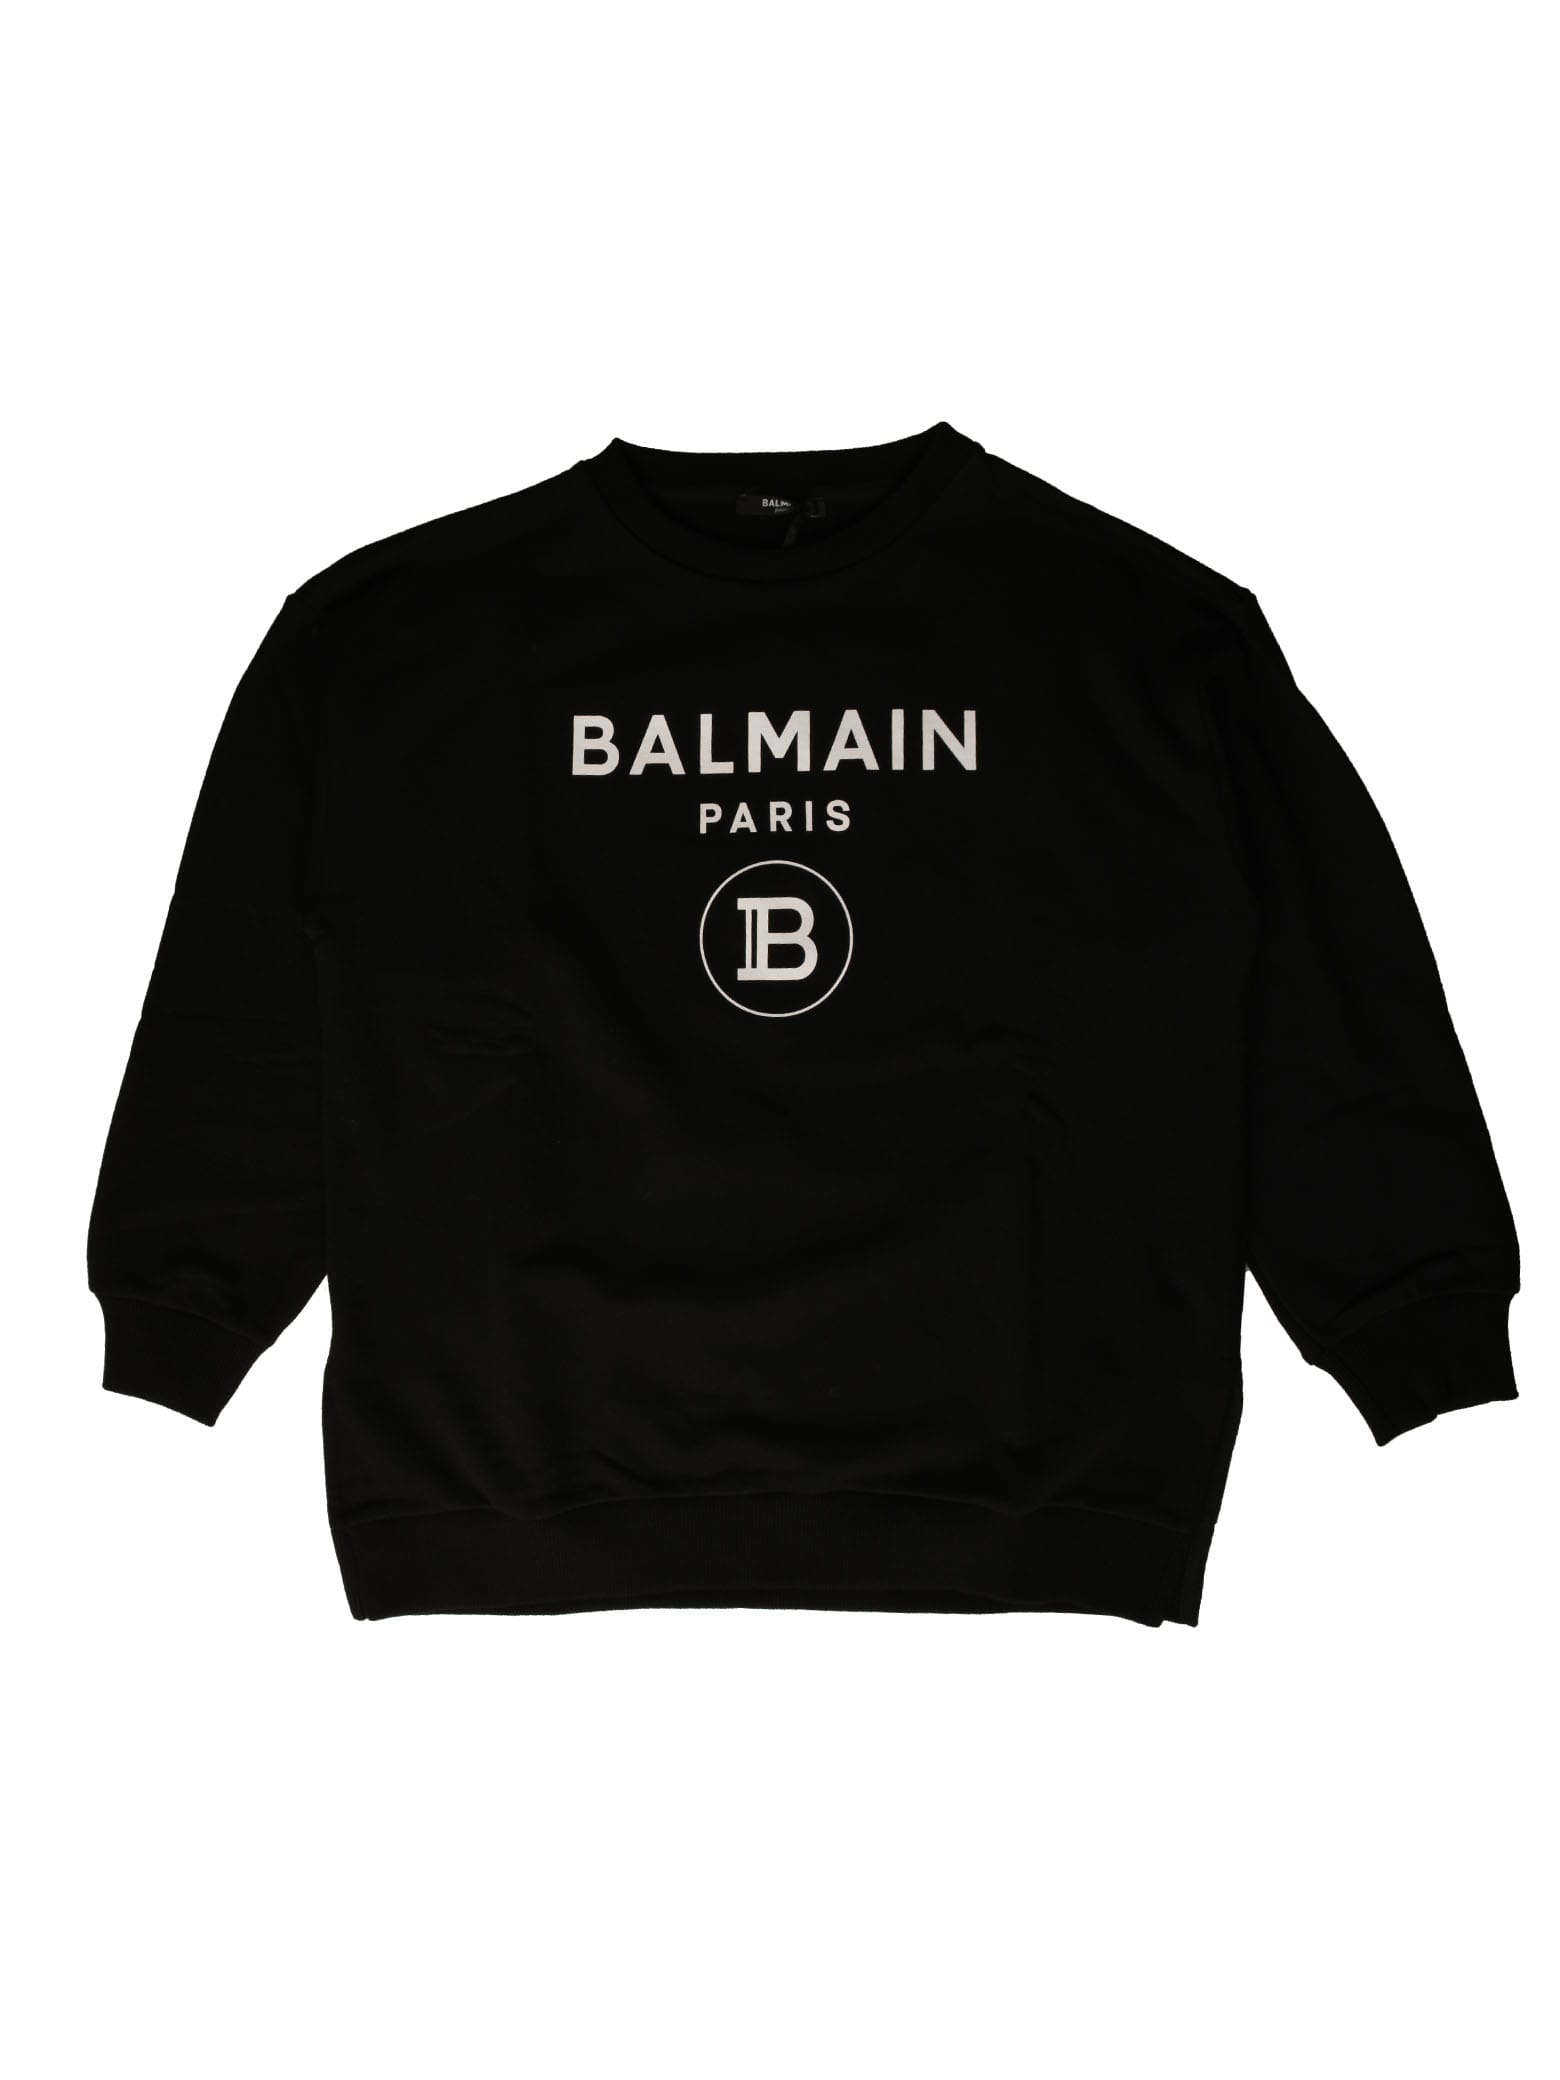 Balmain Black Sweatshirt With White Logo